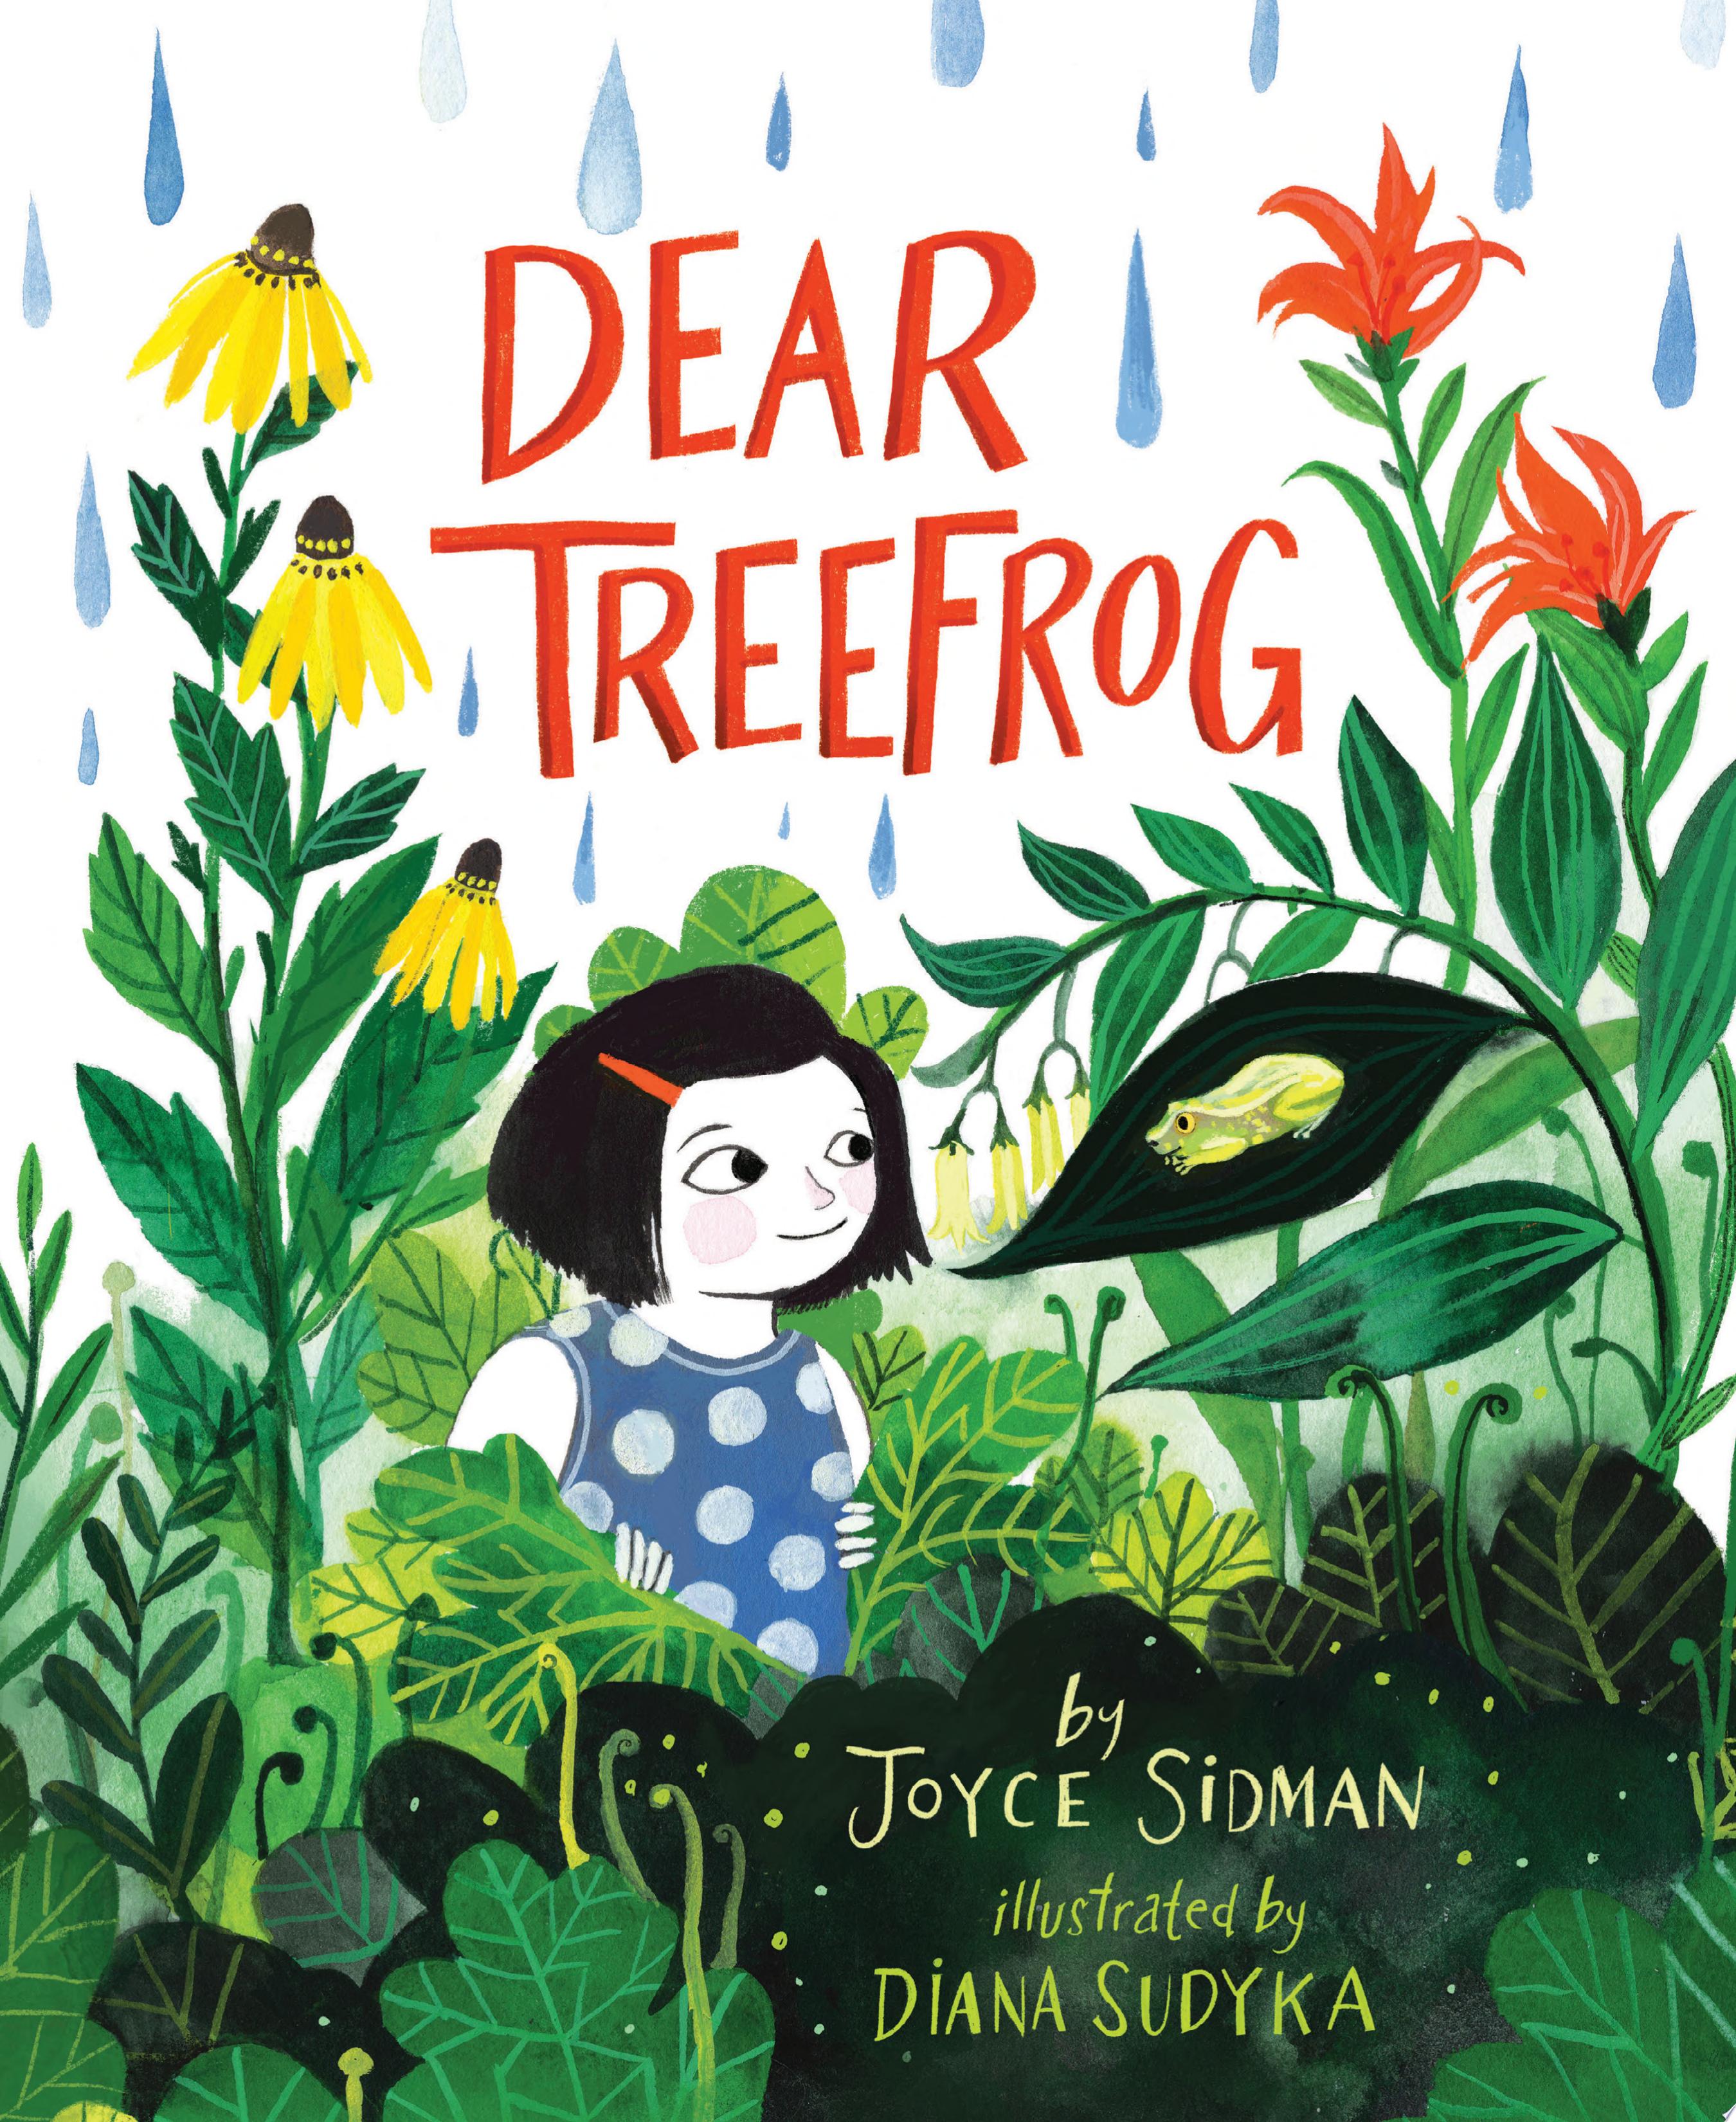 Image for "Dear Treefrog"